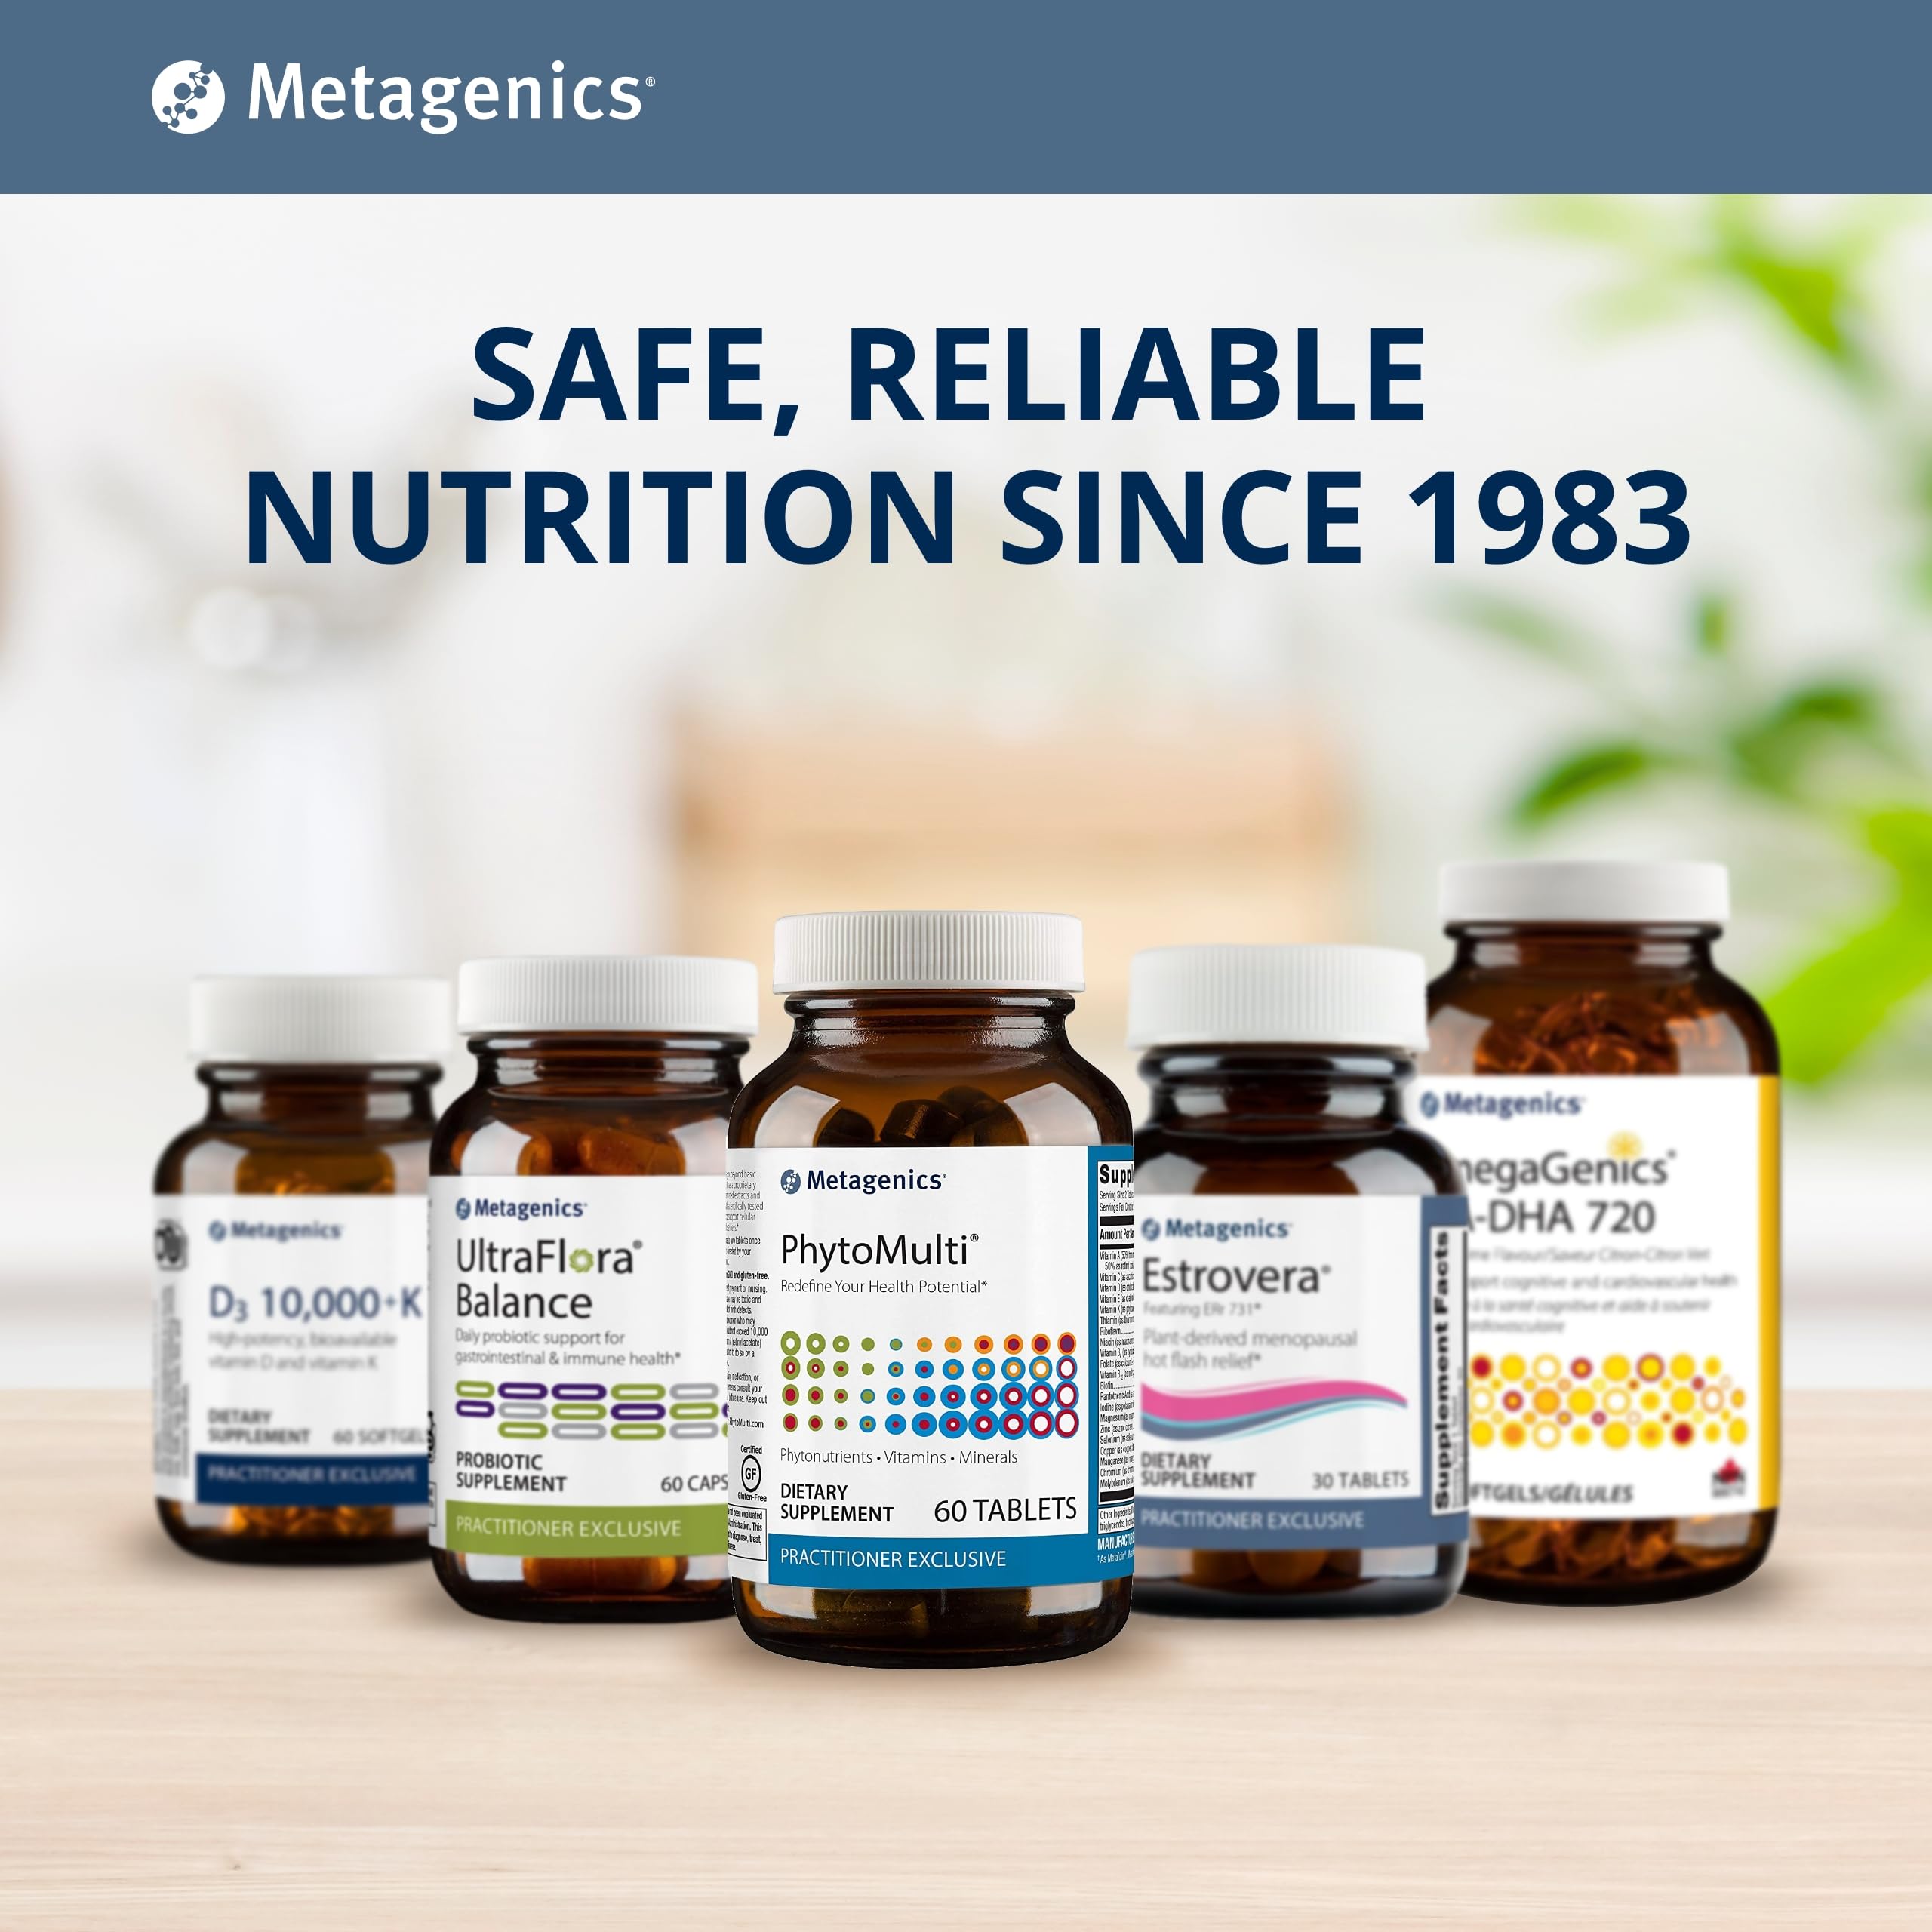 Metagenics MetaKids Probiotic Digestive & Immune Support - 60 Tablets